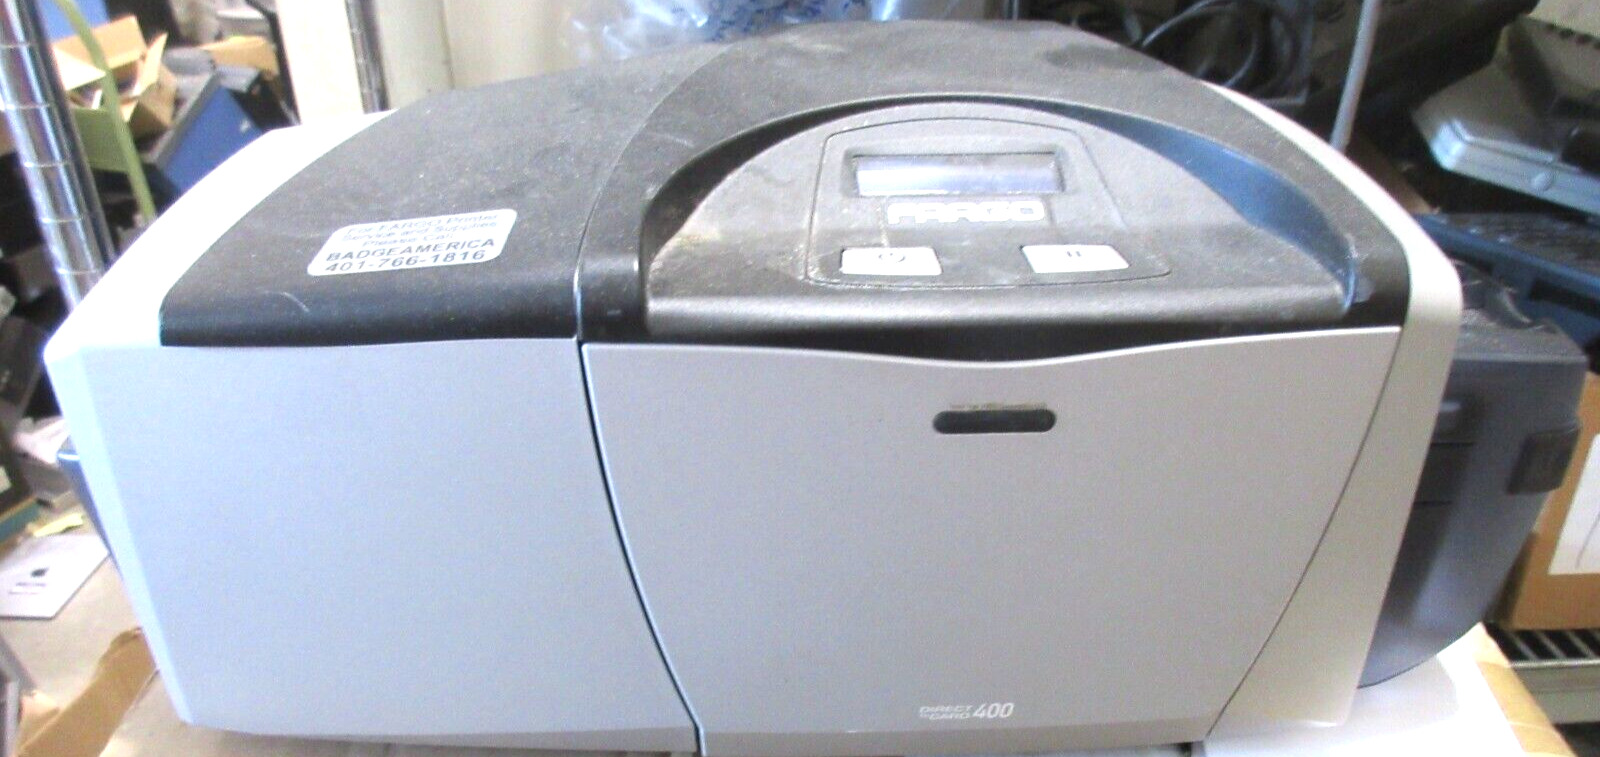 Fargo DTC400 FD Direct to card 400 ID Printer Model 044102